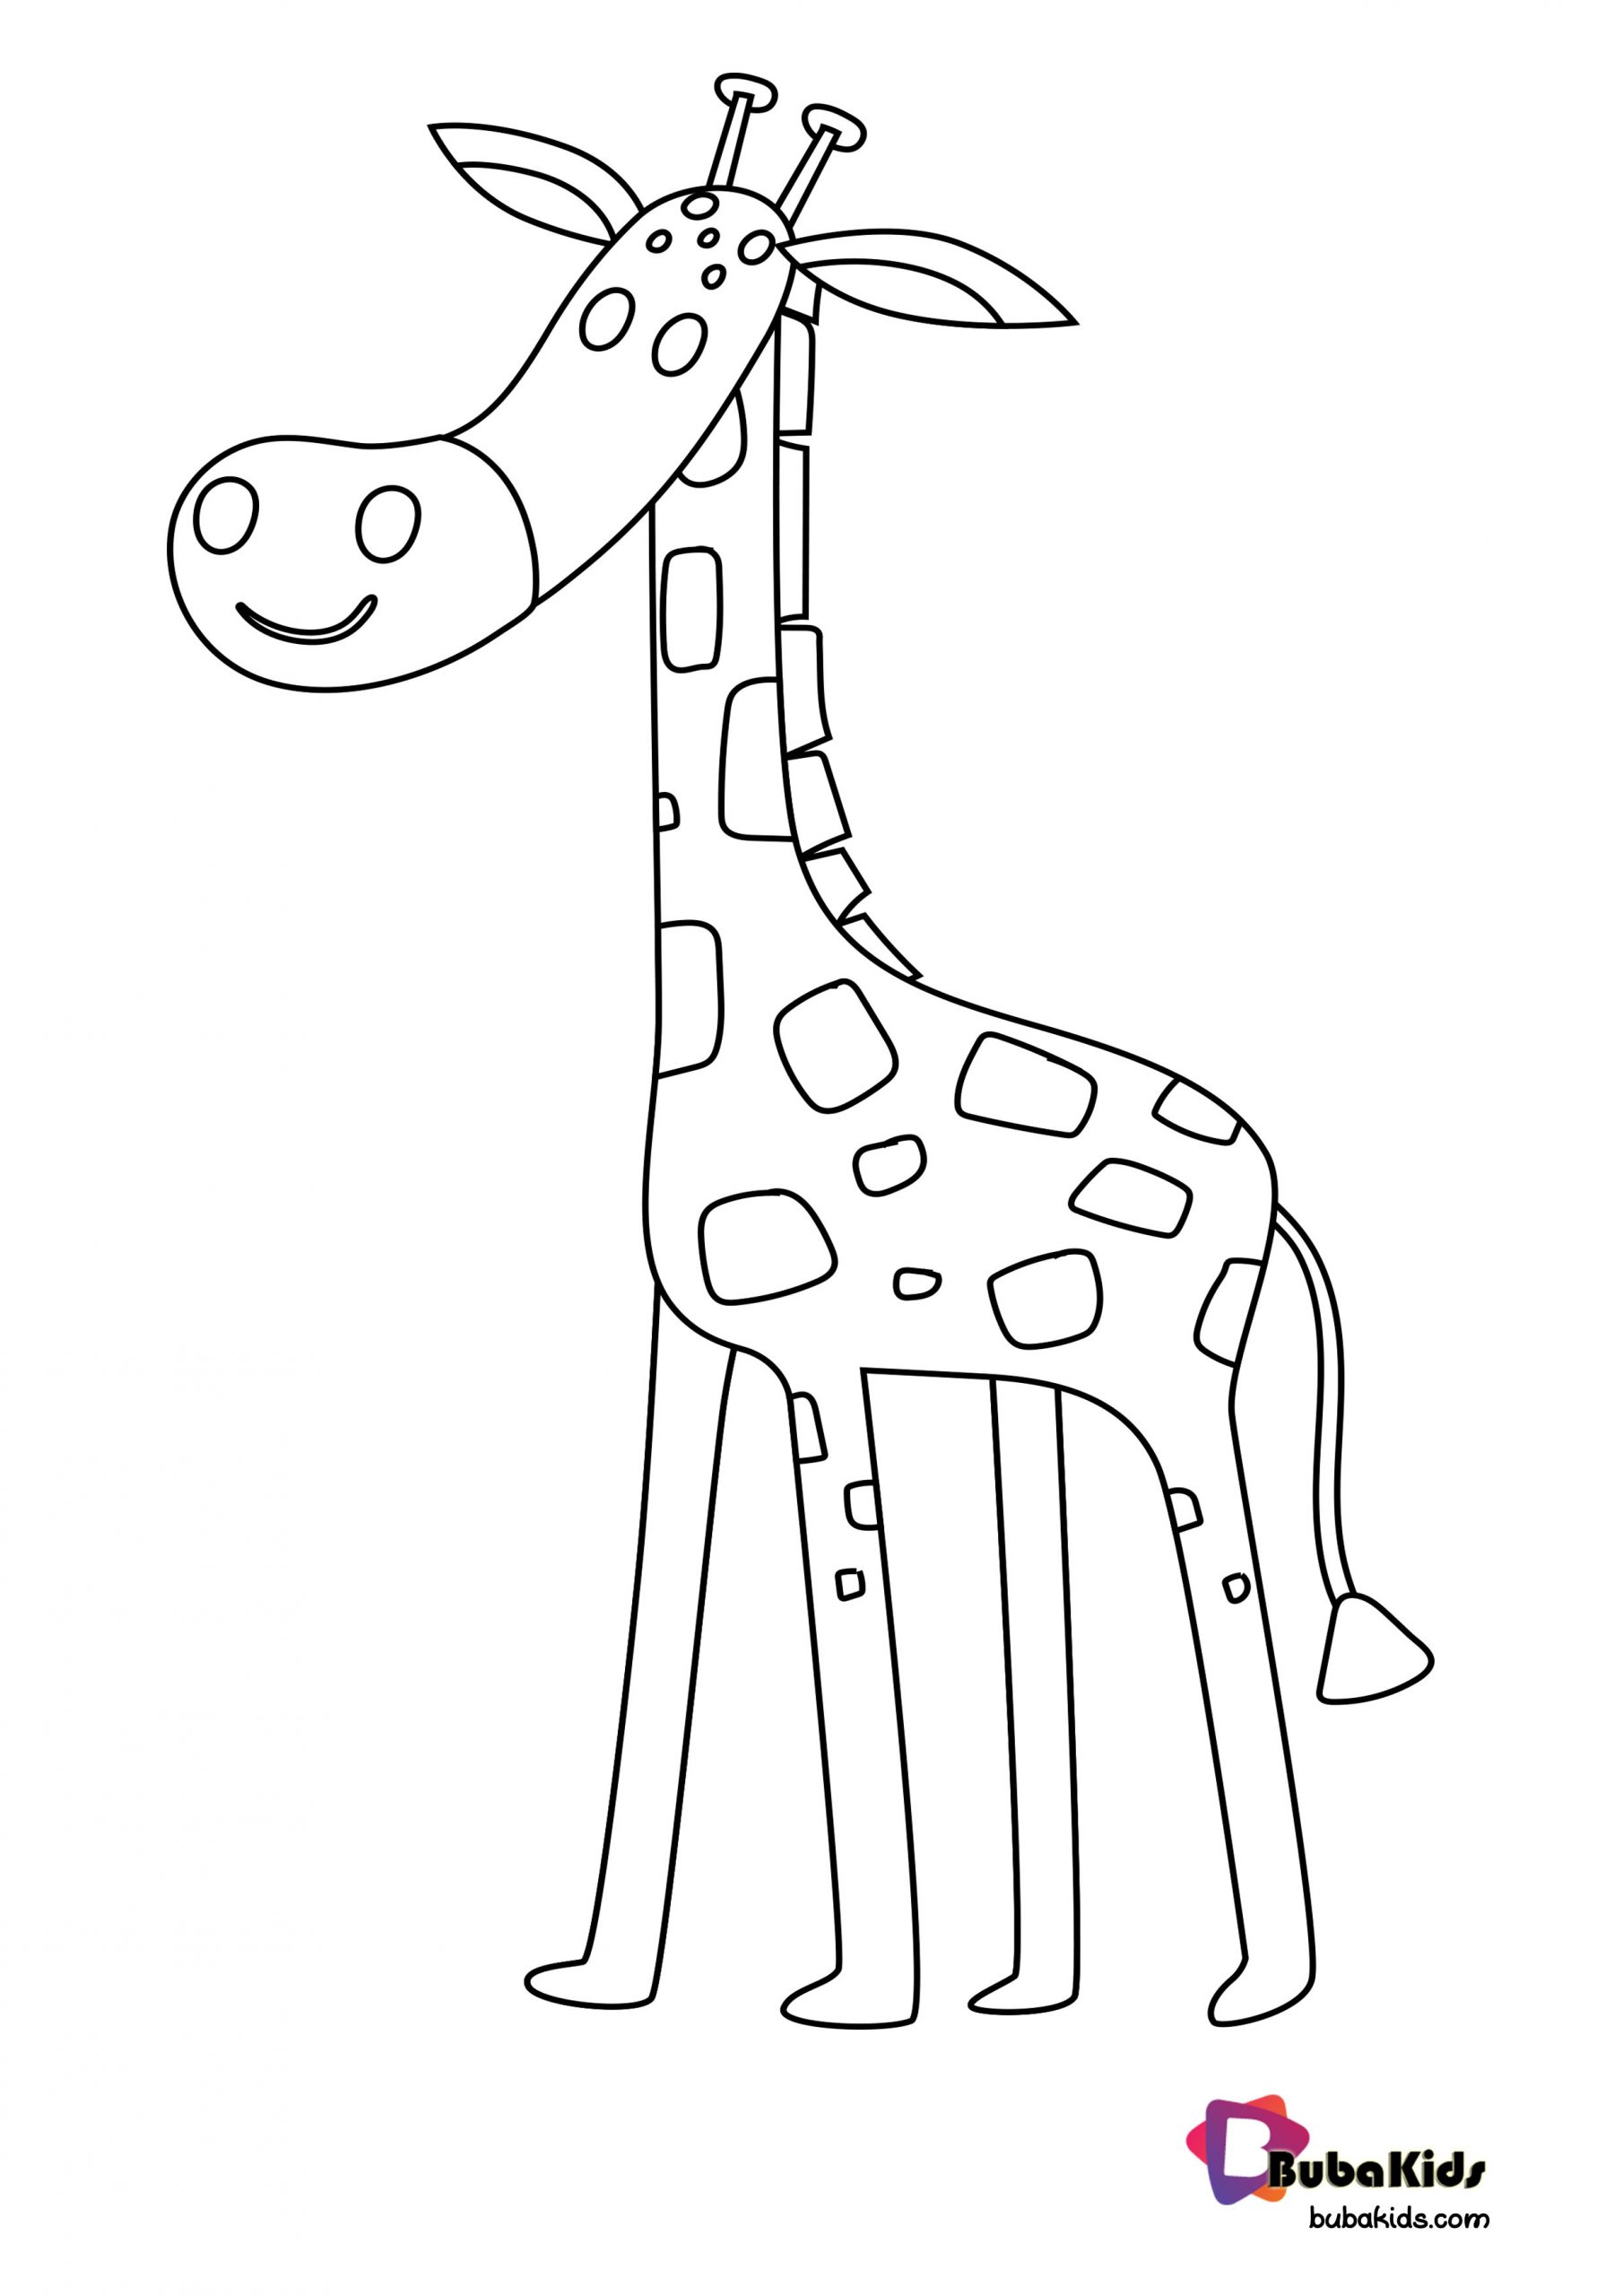 Cute Giraffe For Preschool Kids Coloring Page